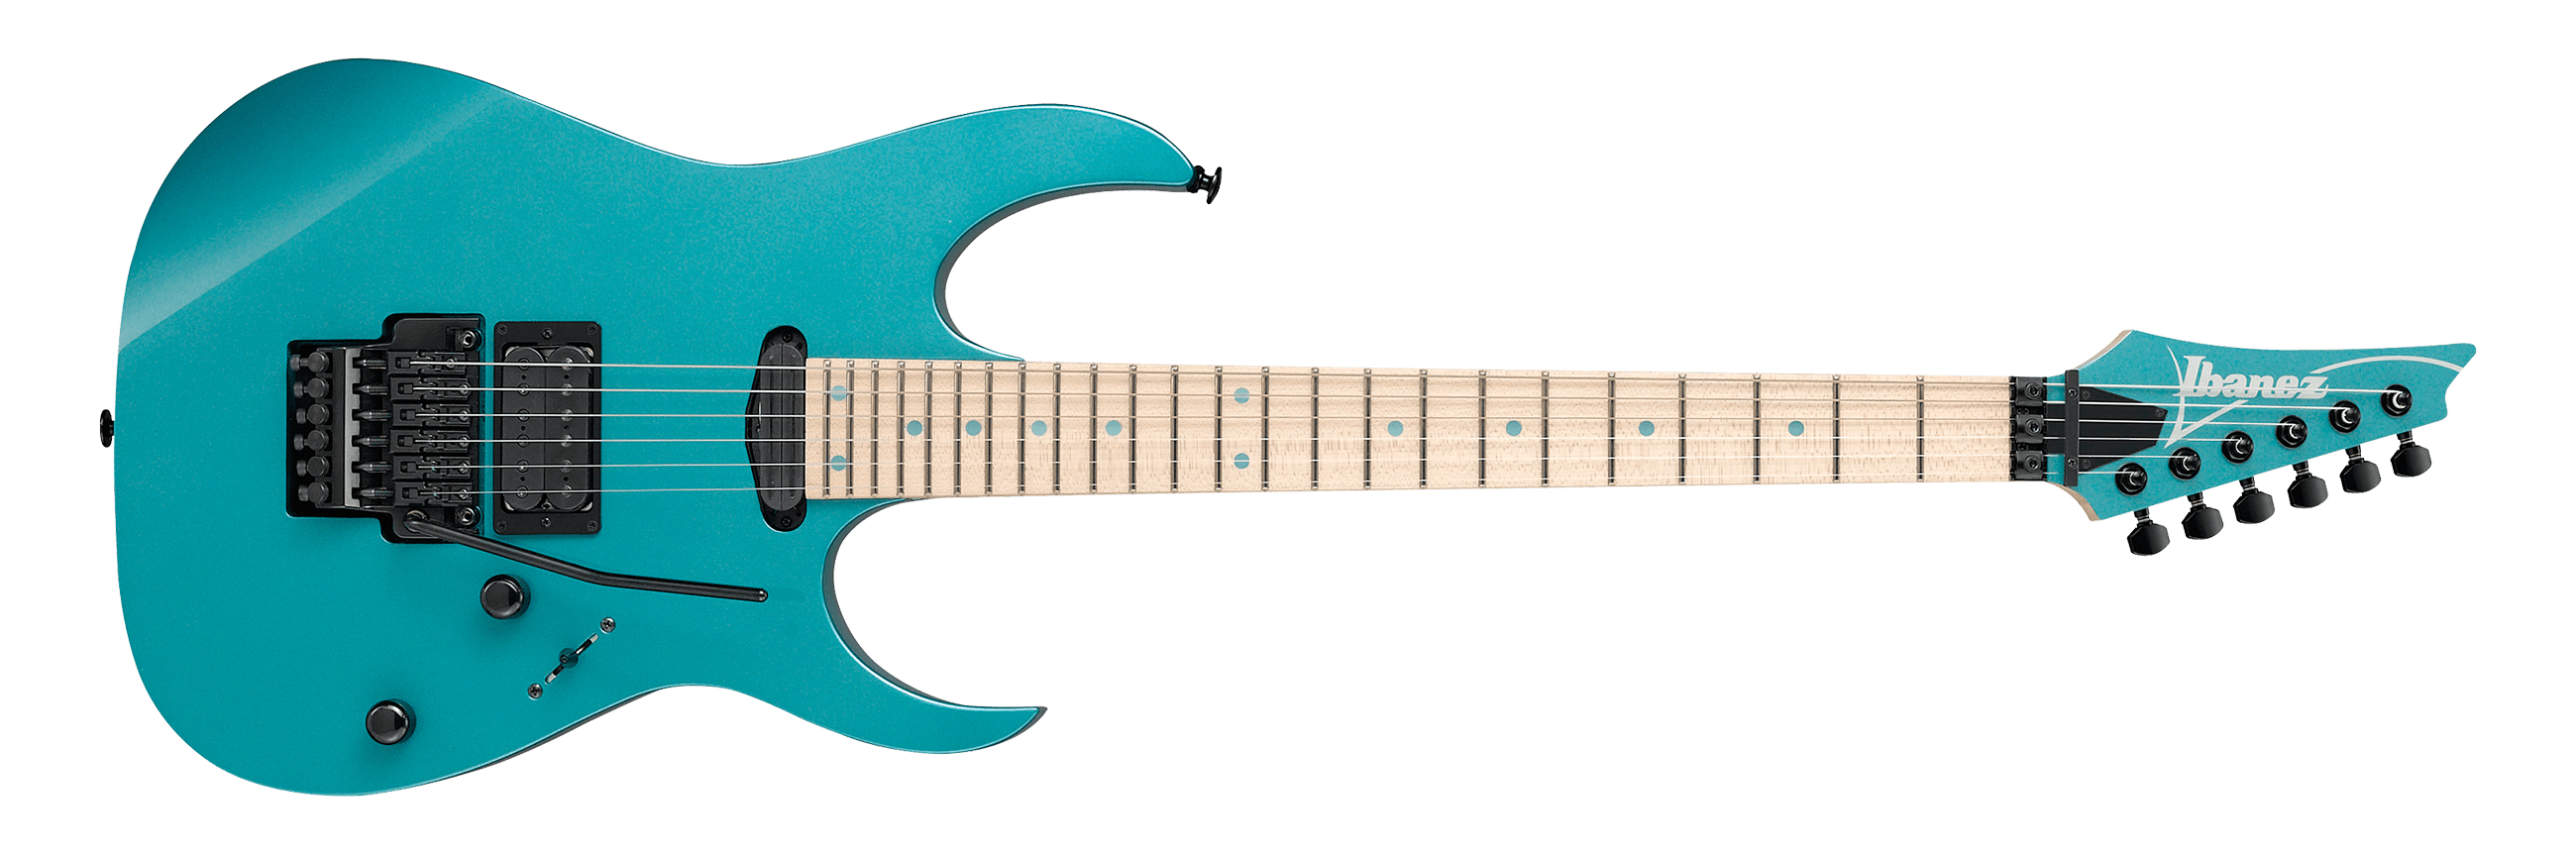 Ibanezer Guitar